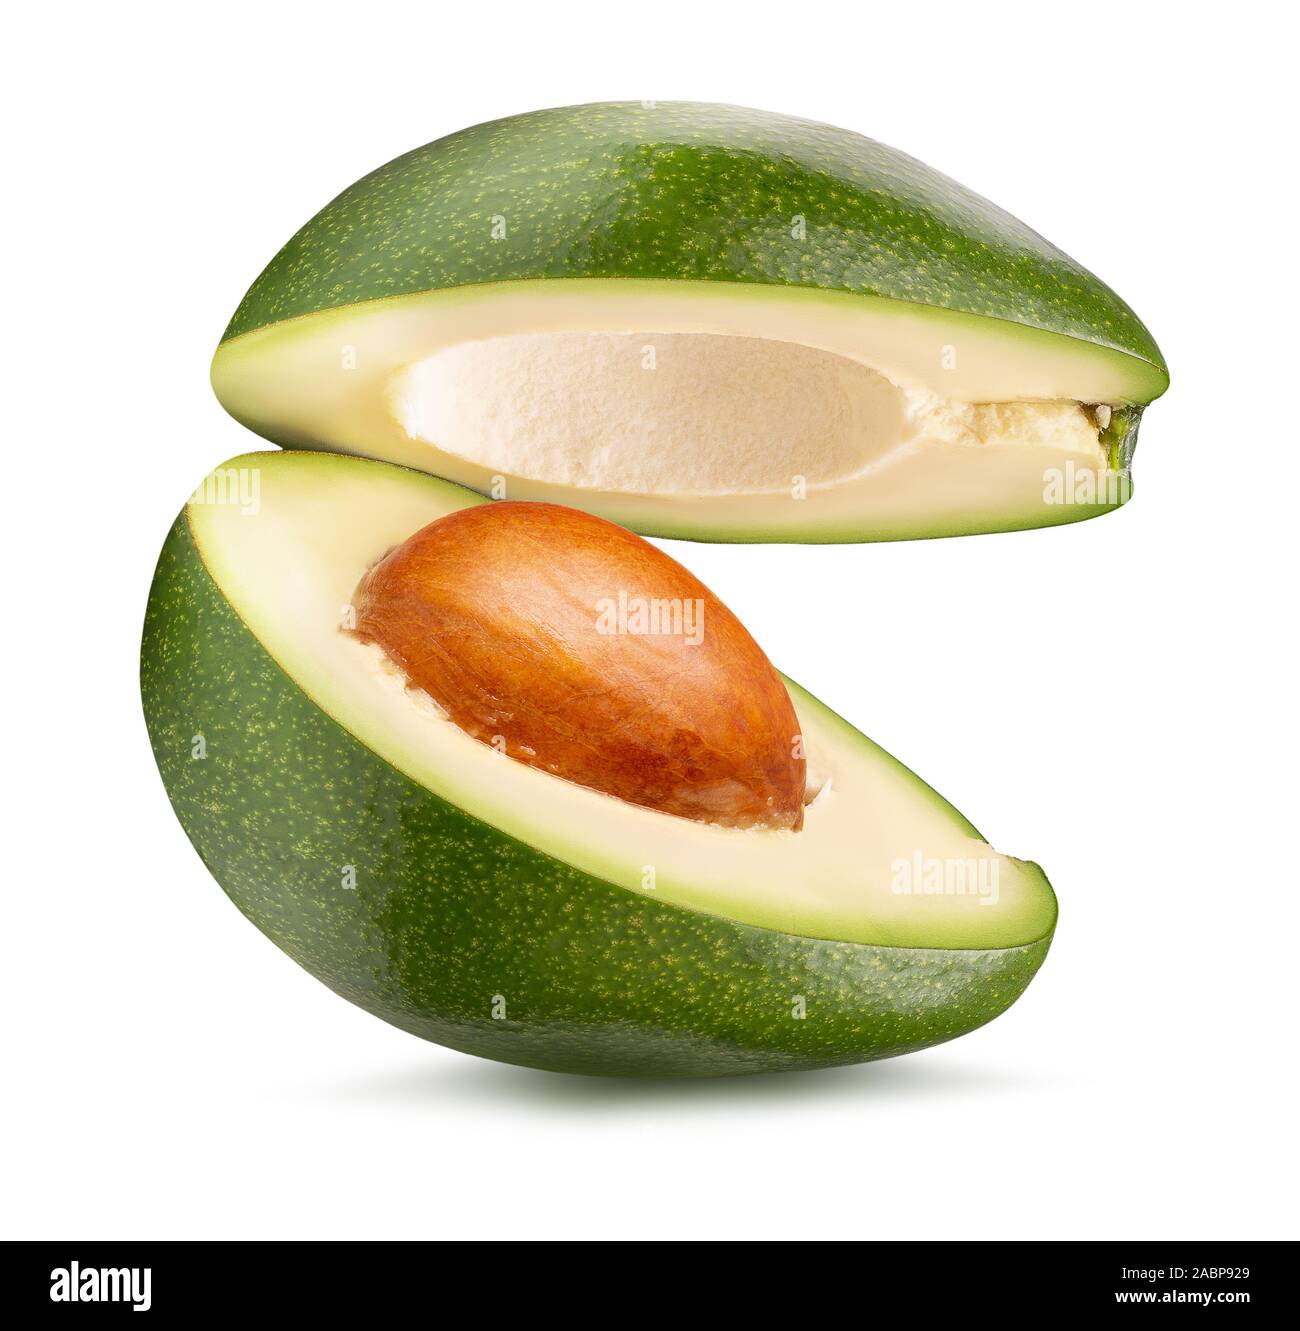 avocado isolated on a white background. Stock Photo